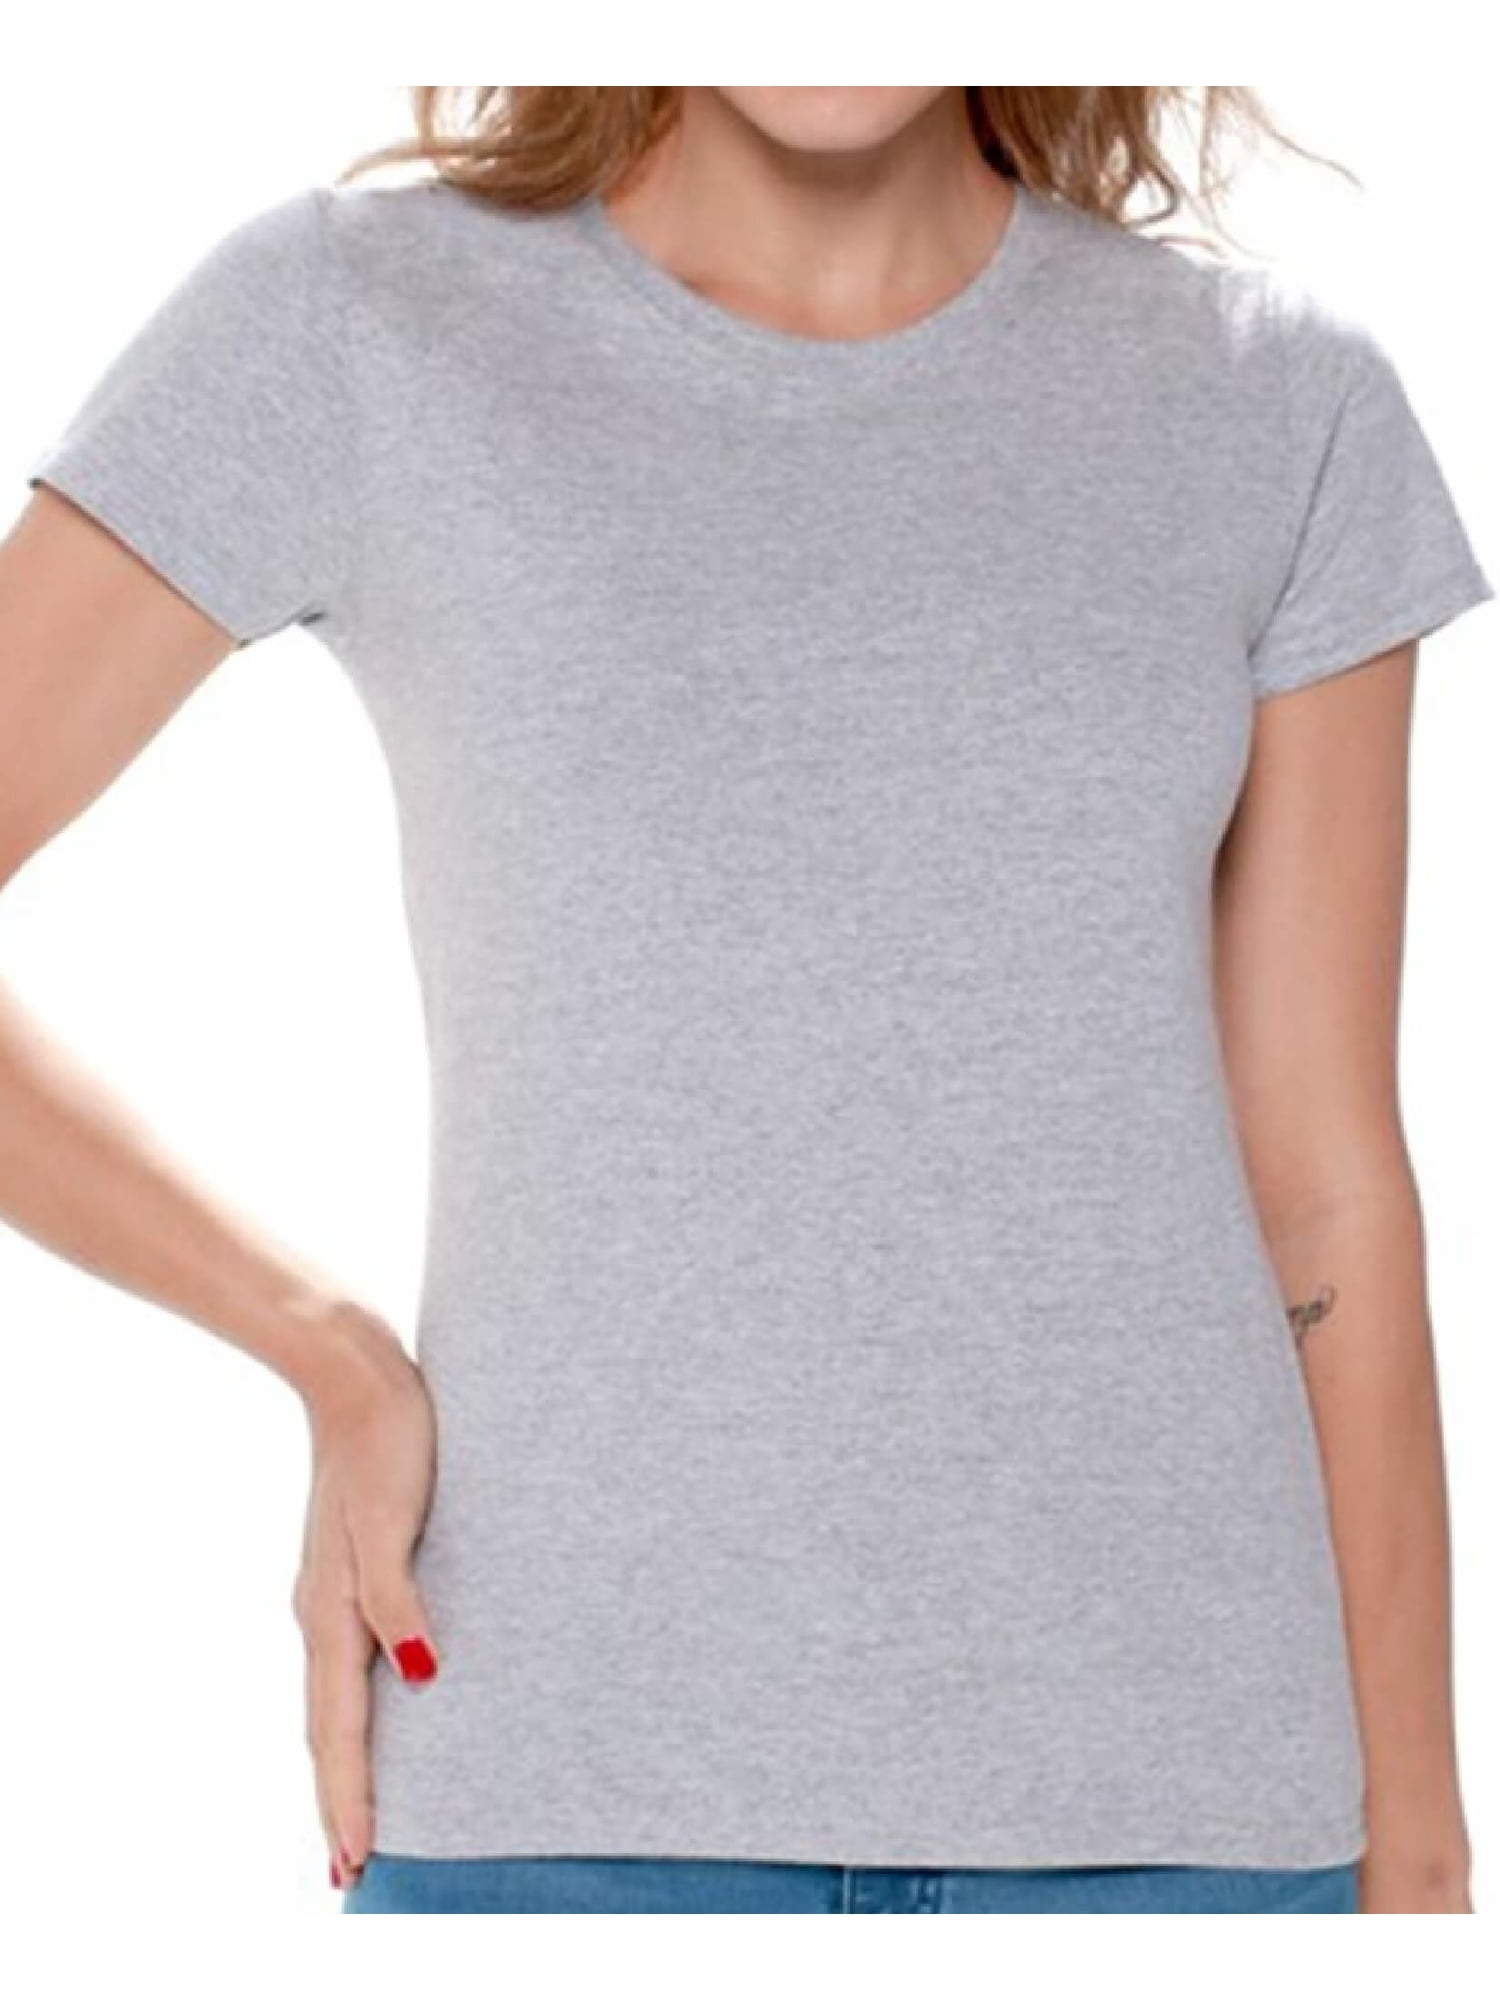 New $32 NCAA Life is Good Women’s T-shirt Ladies Tee Shirt V-neck College Shirt 